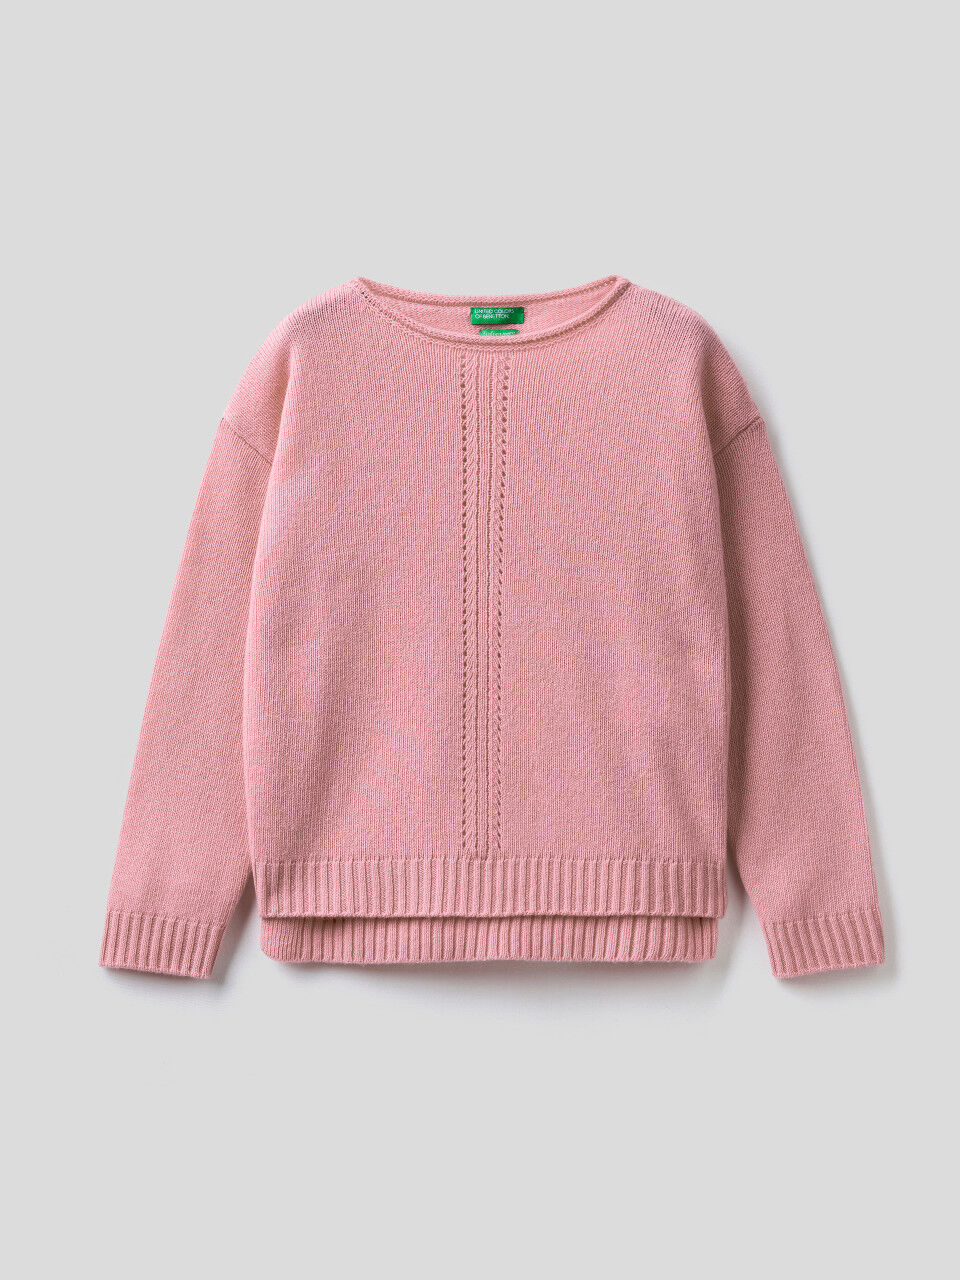 Knit sweater with stitching